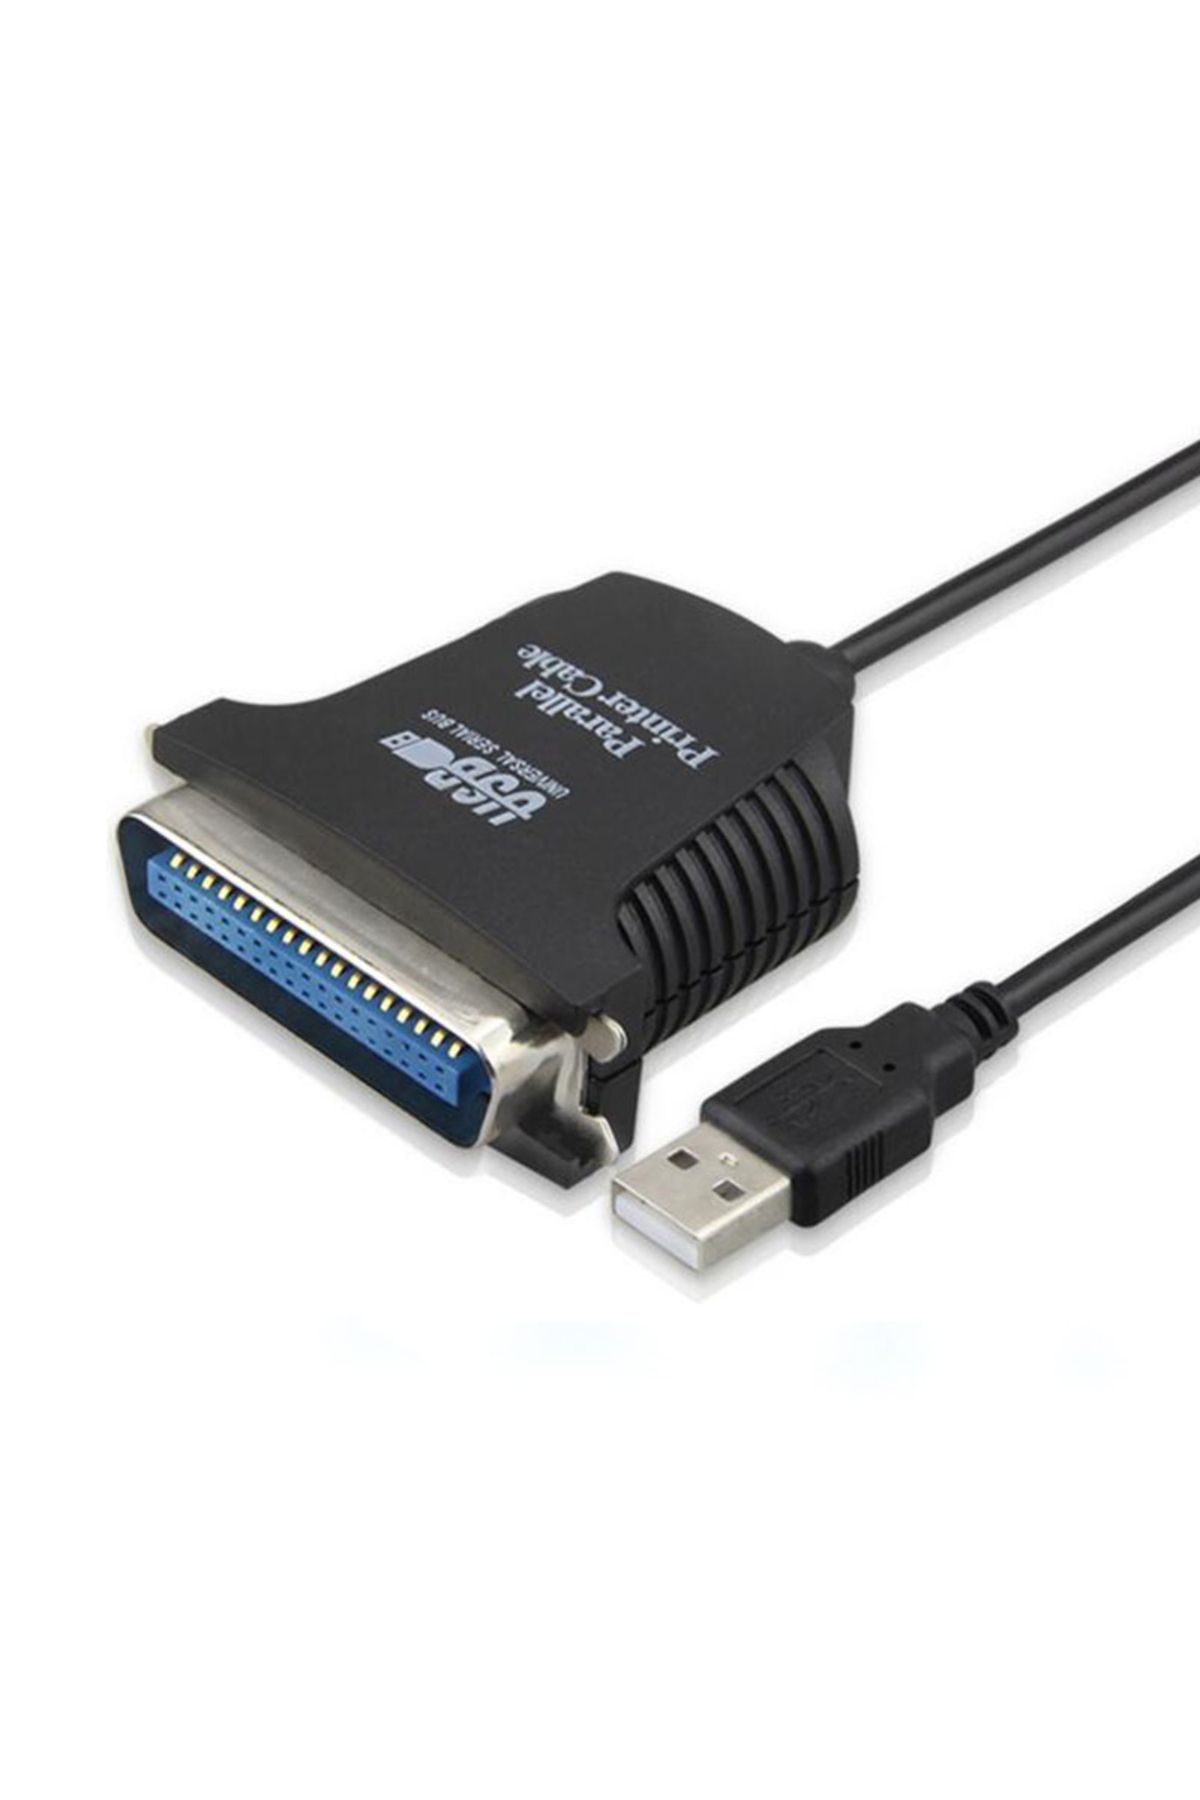 acakir ShopZum PM-6492 USB 2.0 TO 1284 PRINTER KABLO ShopZum 1.5 METRE (USB-LPT)